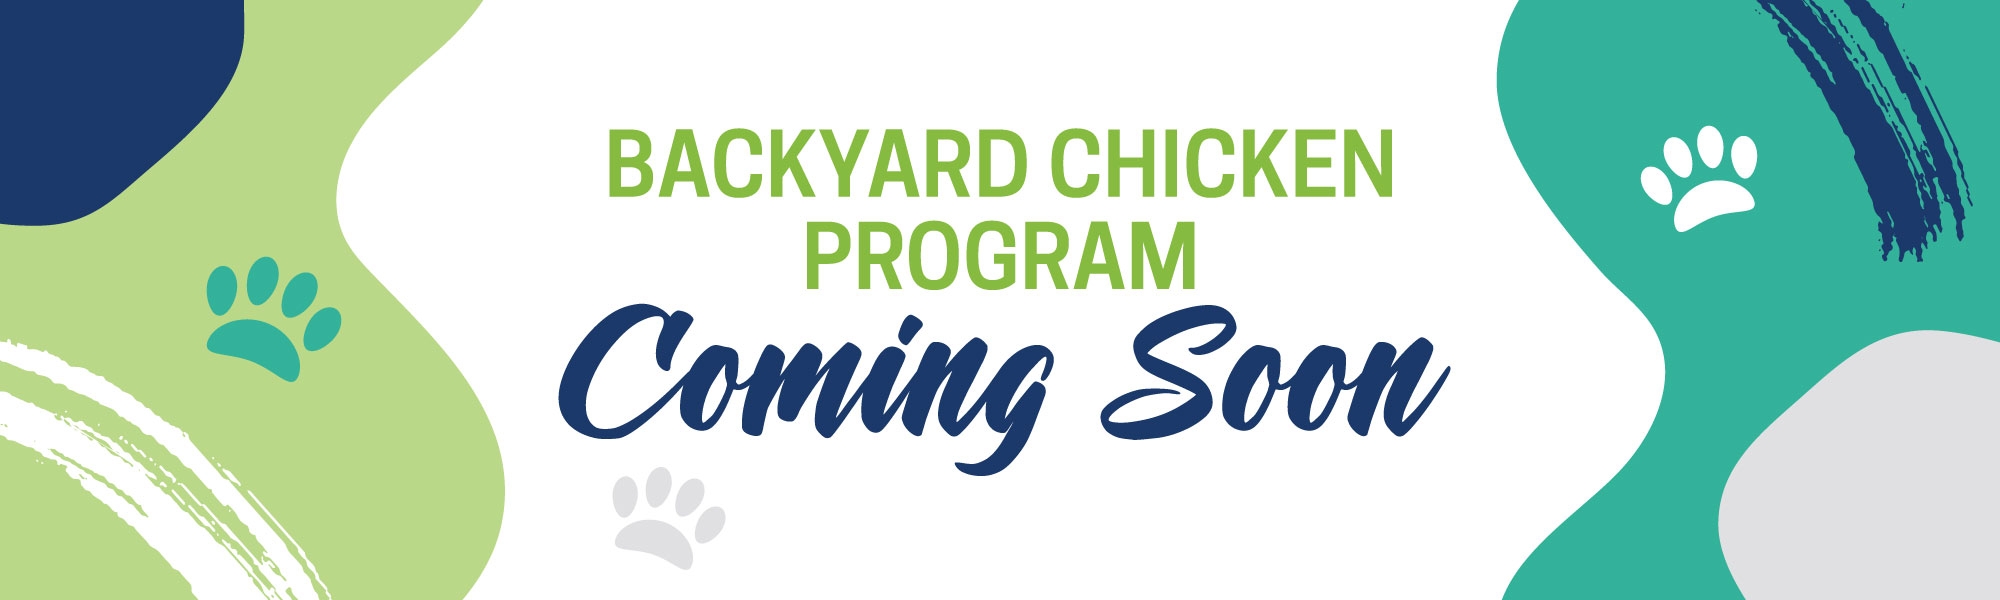 Backyard Chicken Program Coming Soon